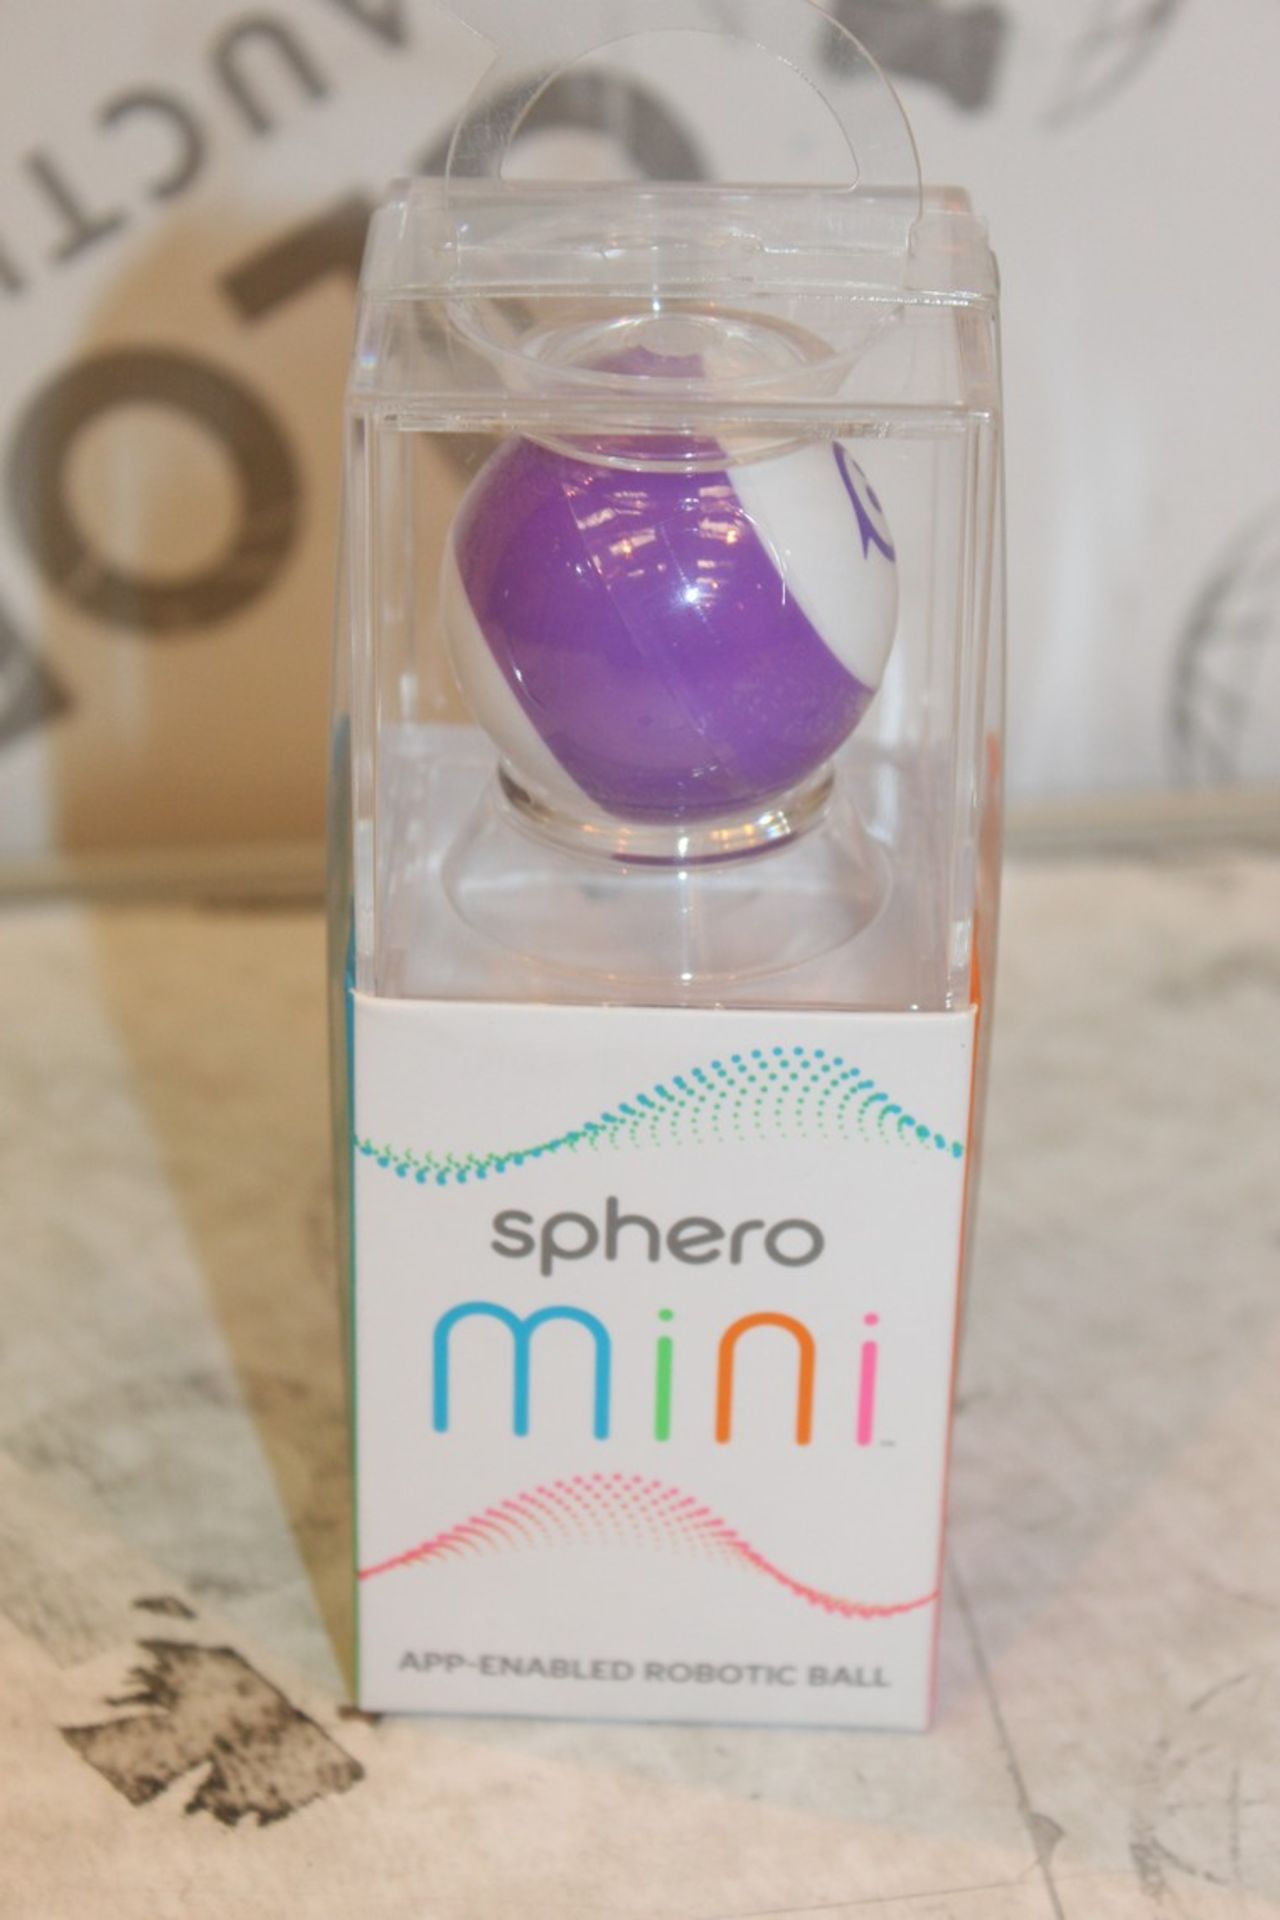 1 Boxed Sphero Mini Purple App Enabled Robotic Ball RRP £60 (Public Viewings & Appraisals